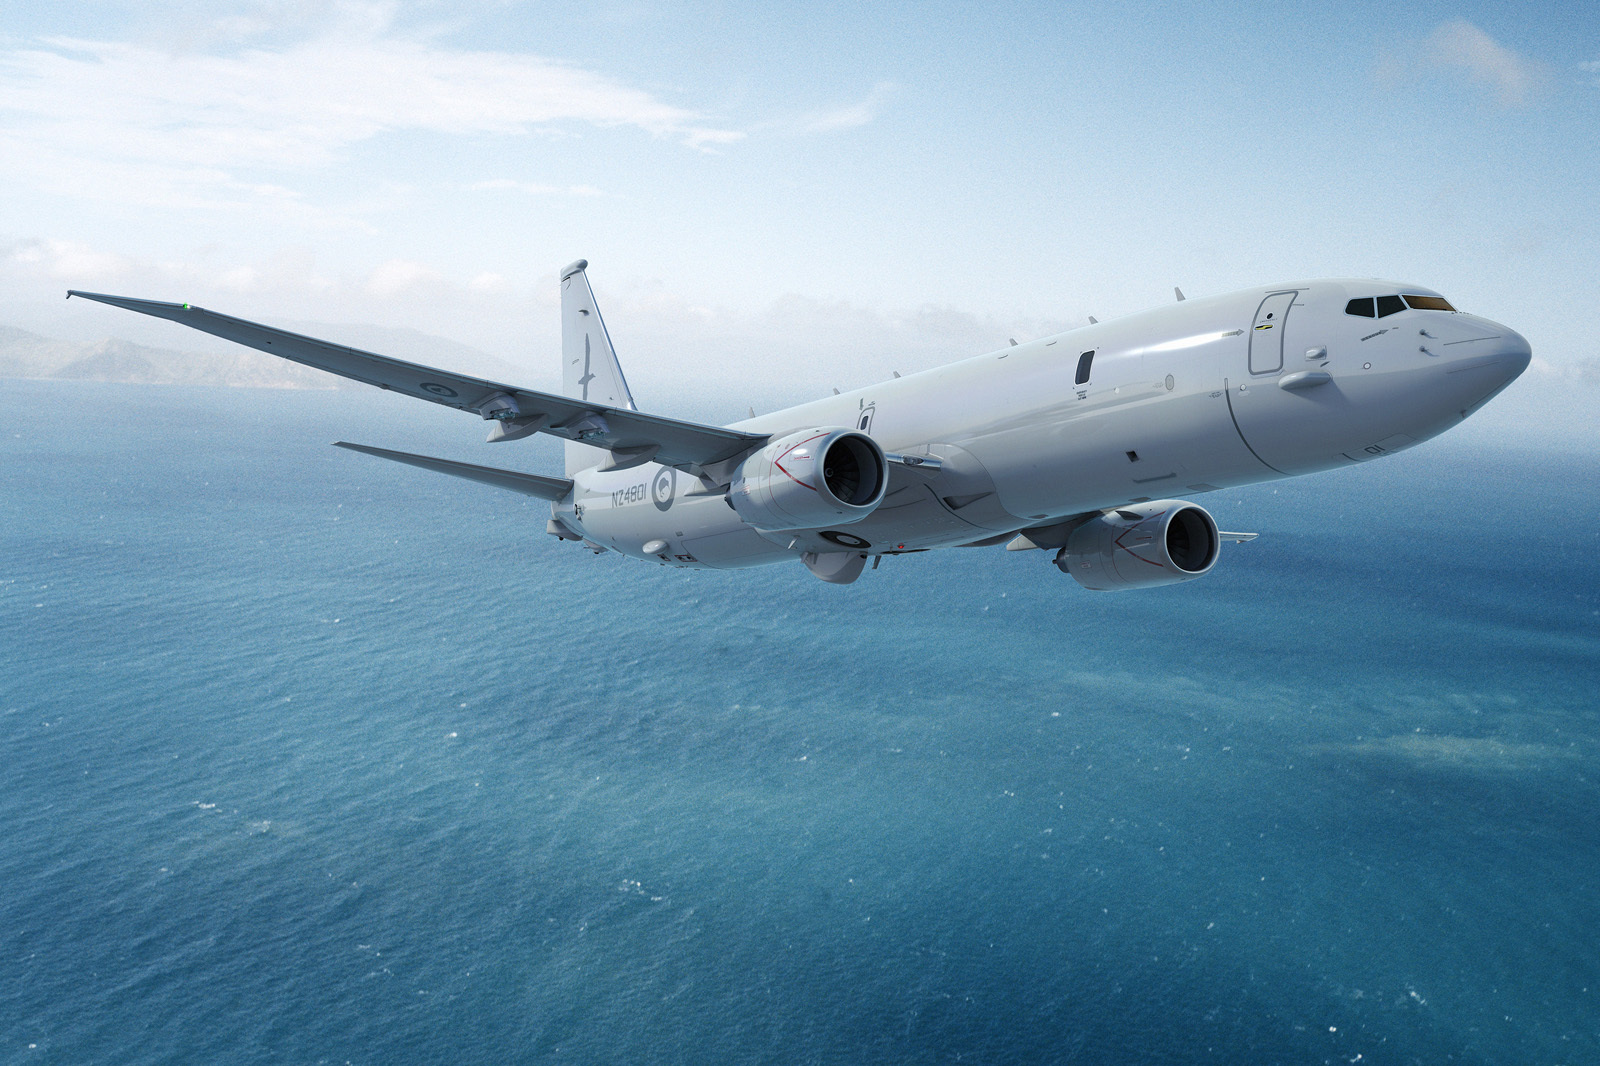 NZ awaits its first P-8A aircraft later this year